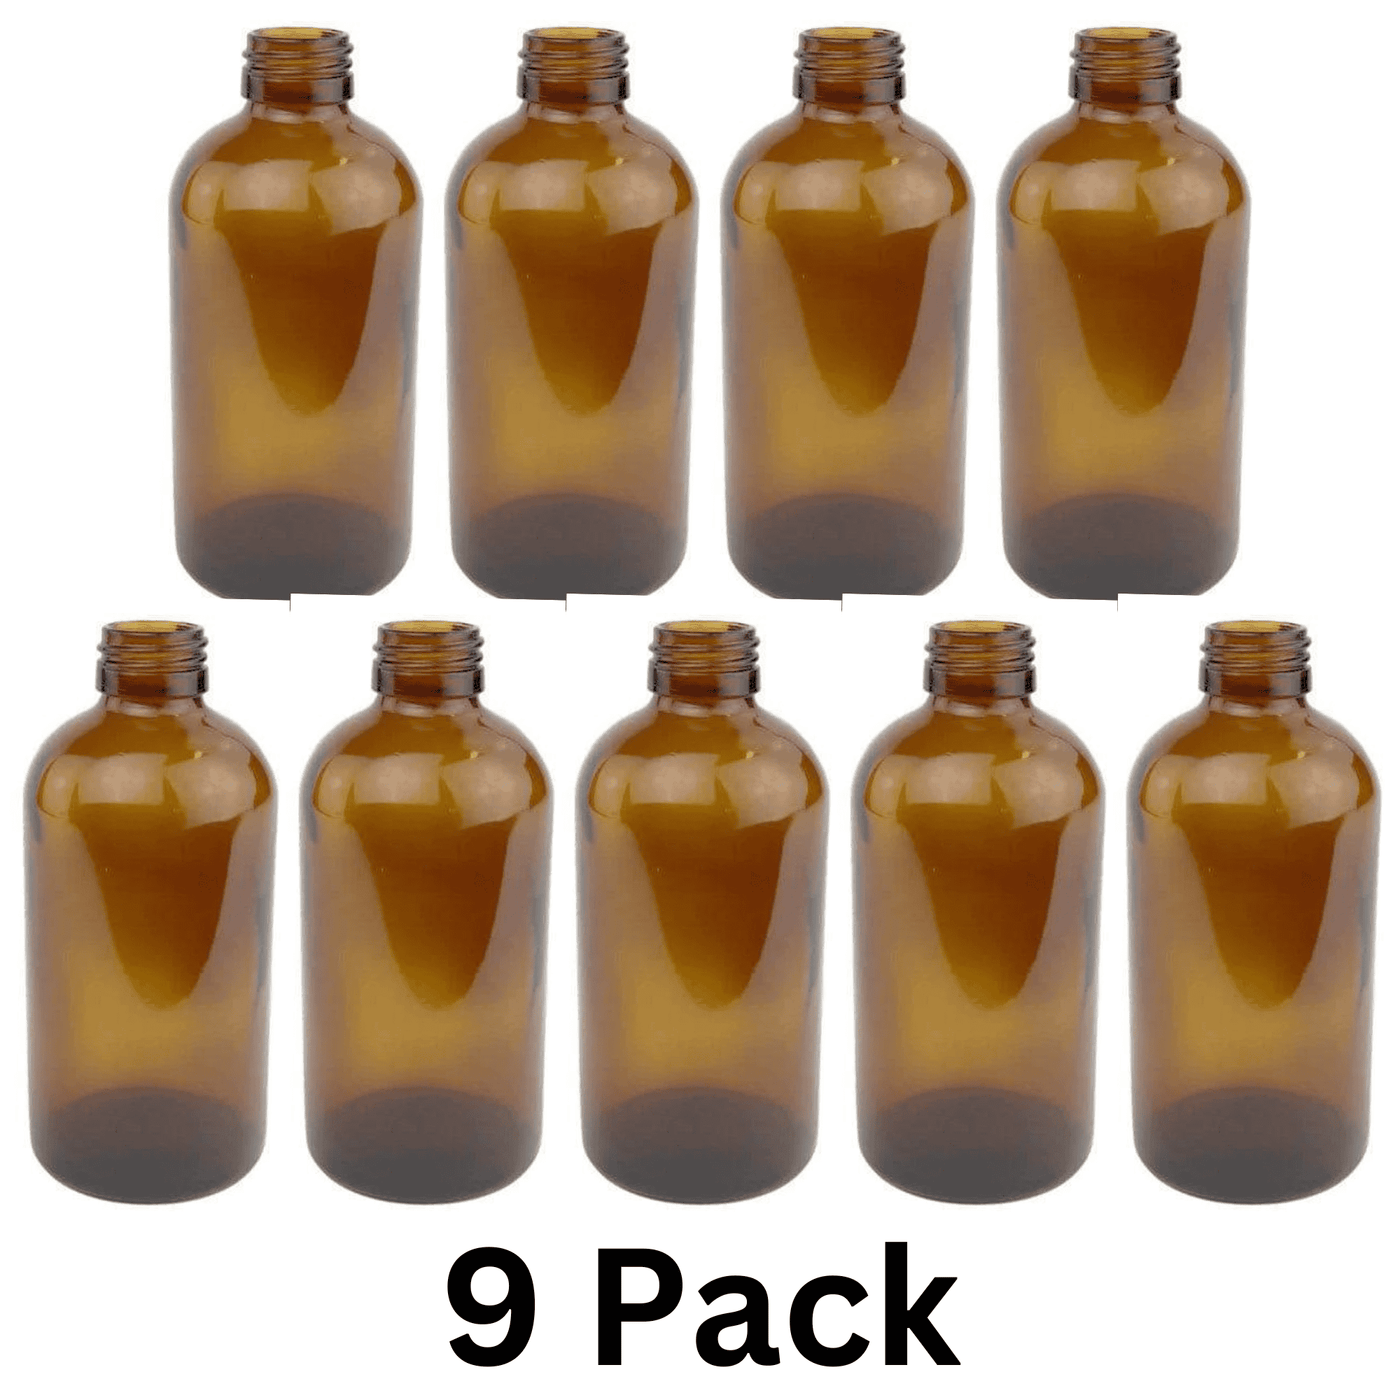 250ml Amber 'Boston' Style Glass Bottle - 9 Pack